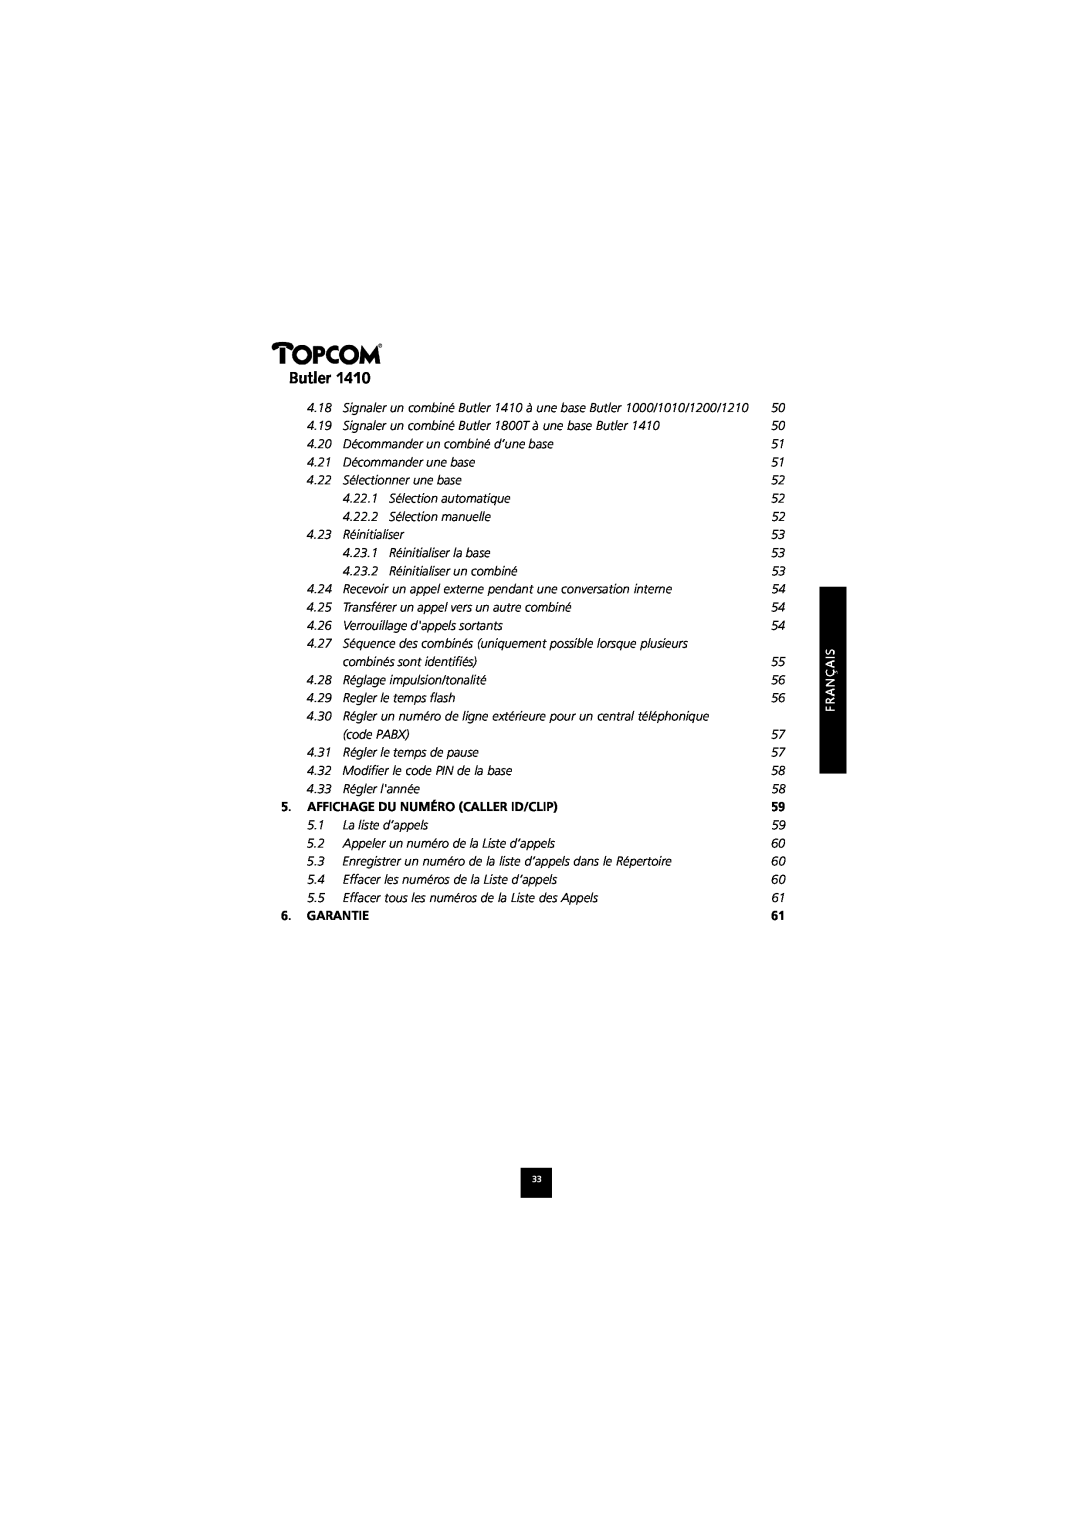 Topcom 1410 manual Butler, Affichage Du Numéro Caller Id/Clip, Garantie 